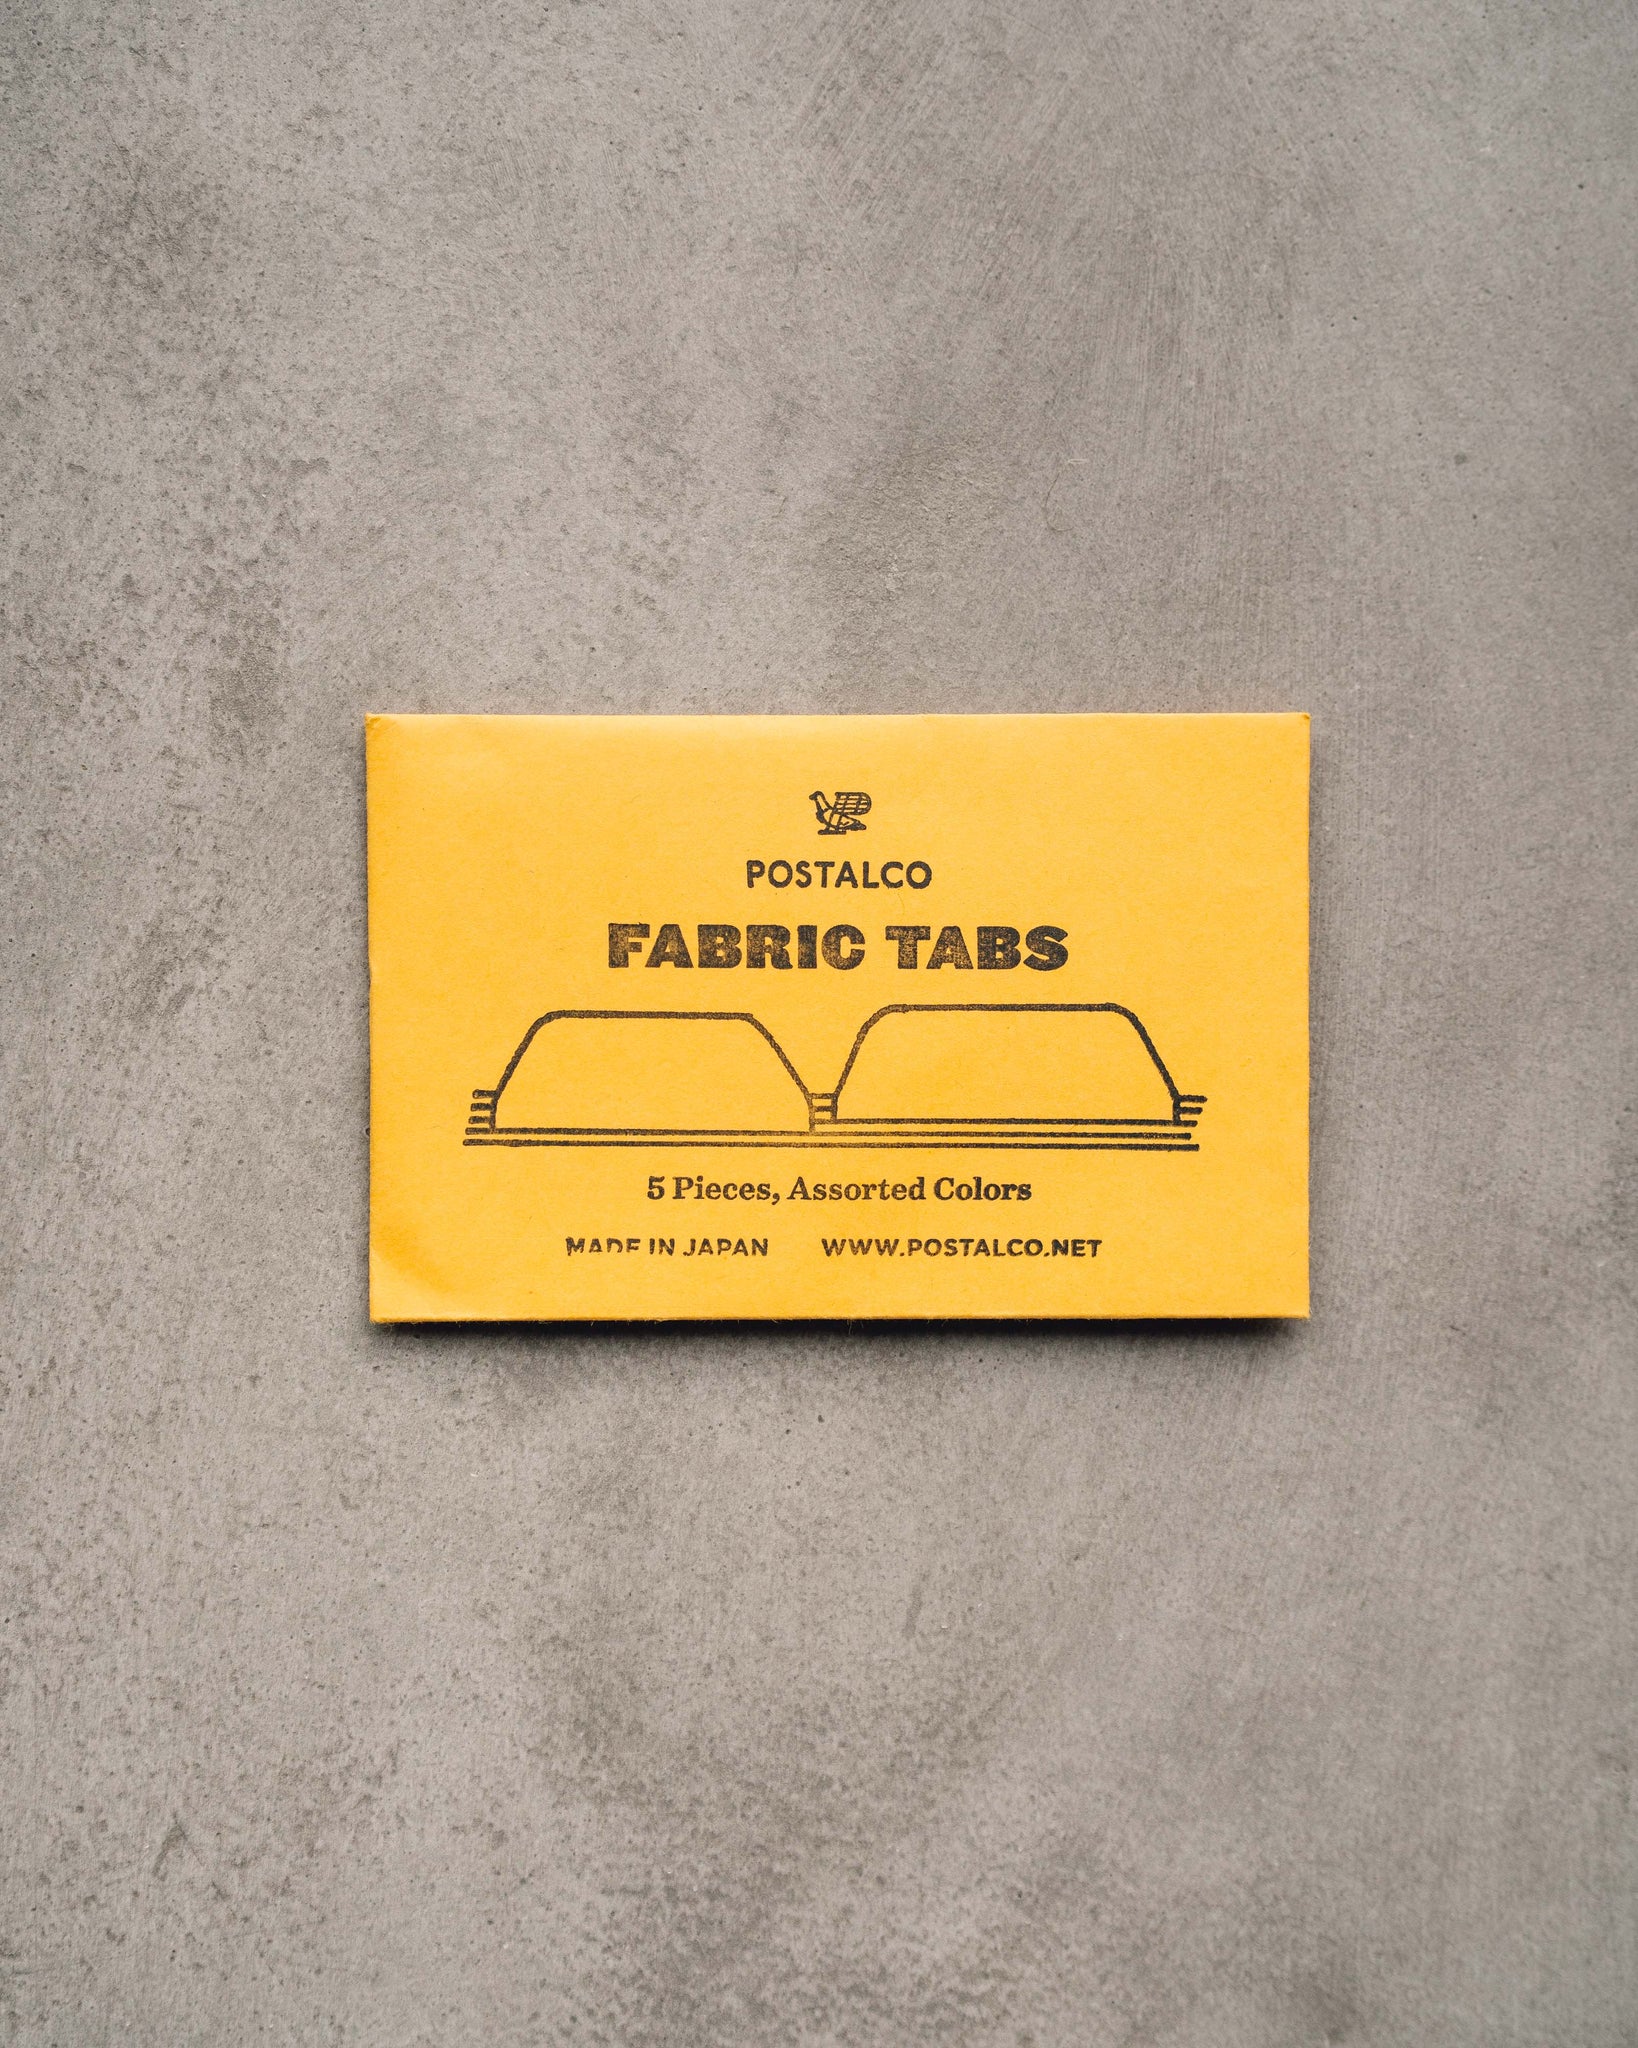 Postalco Fabric Tabs